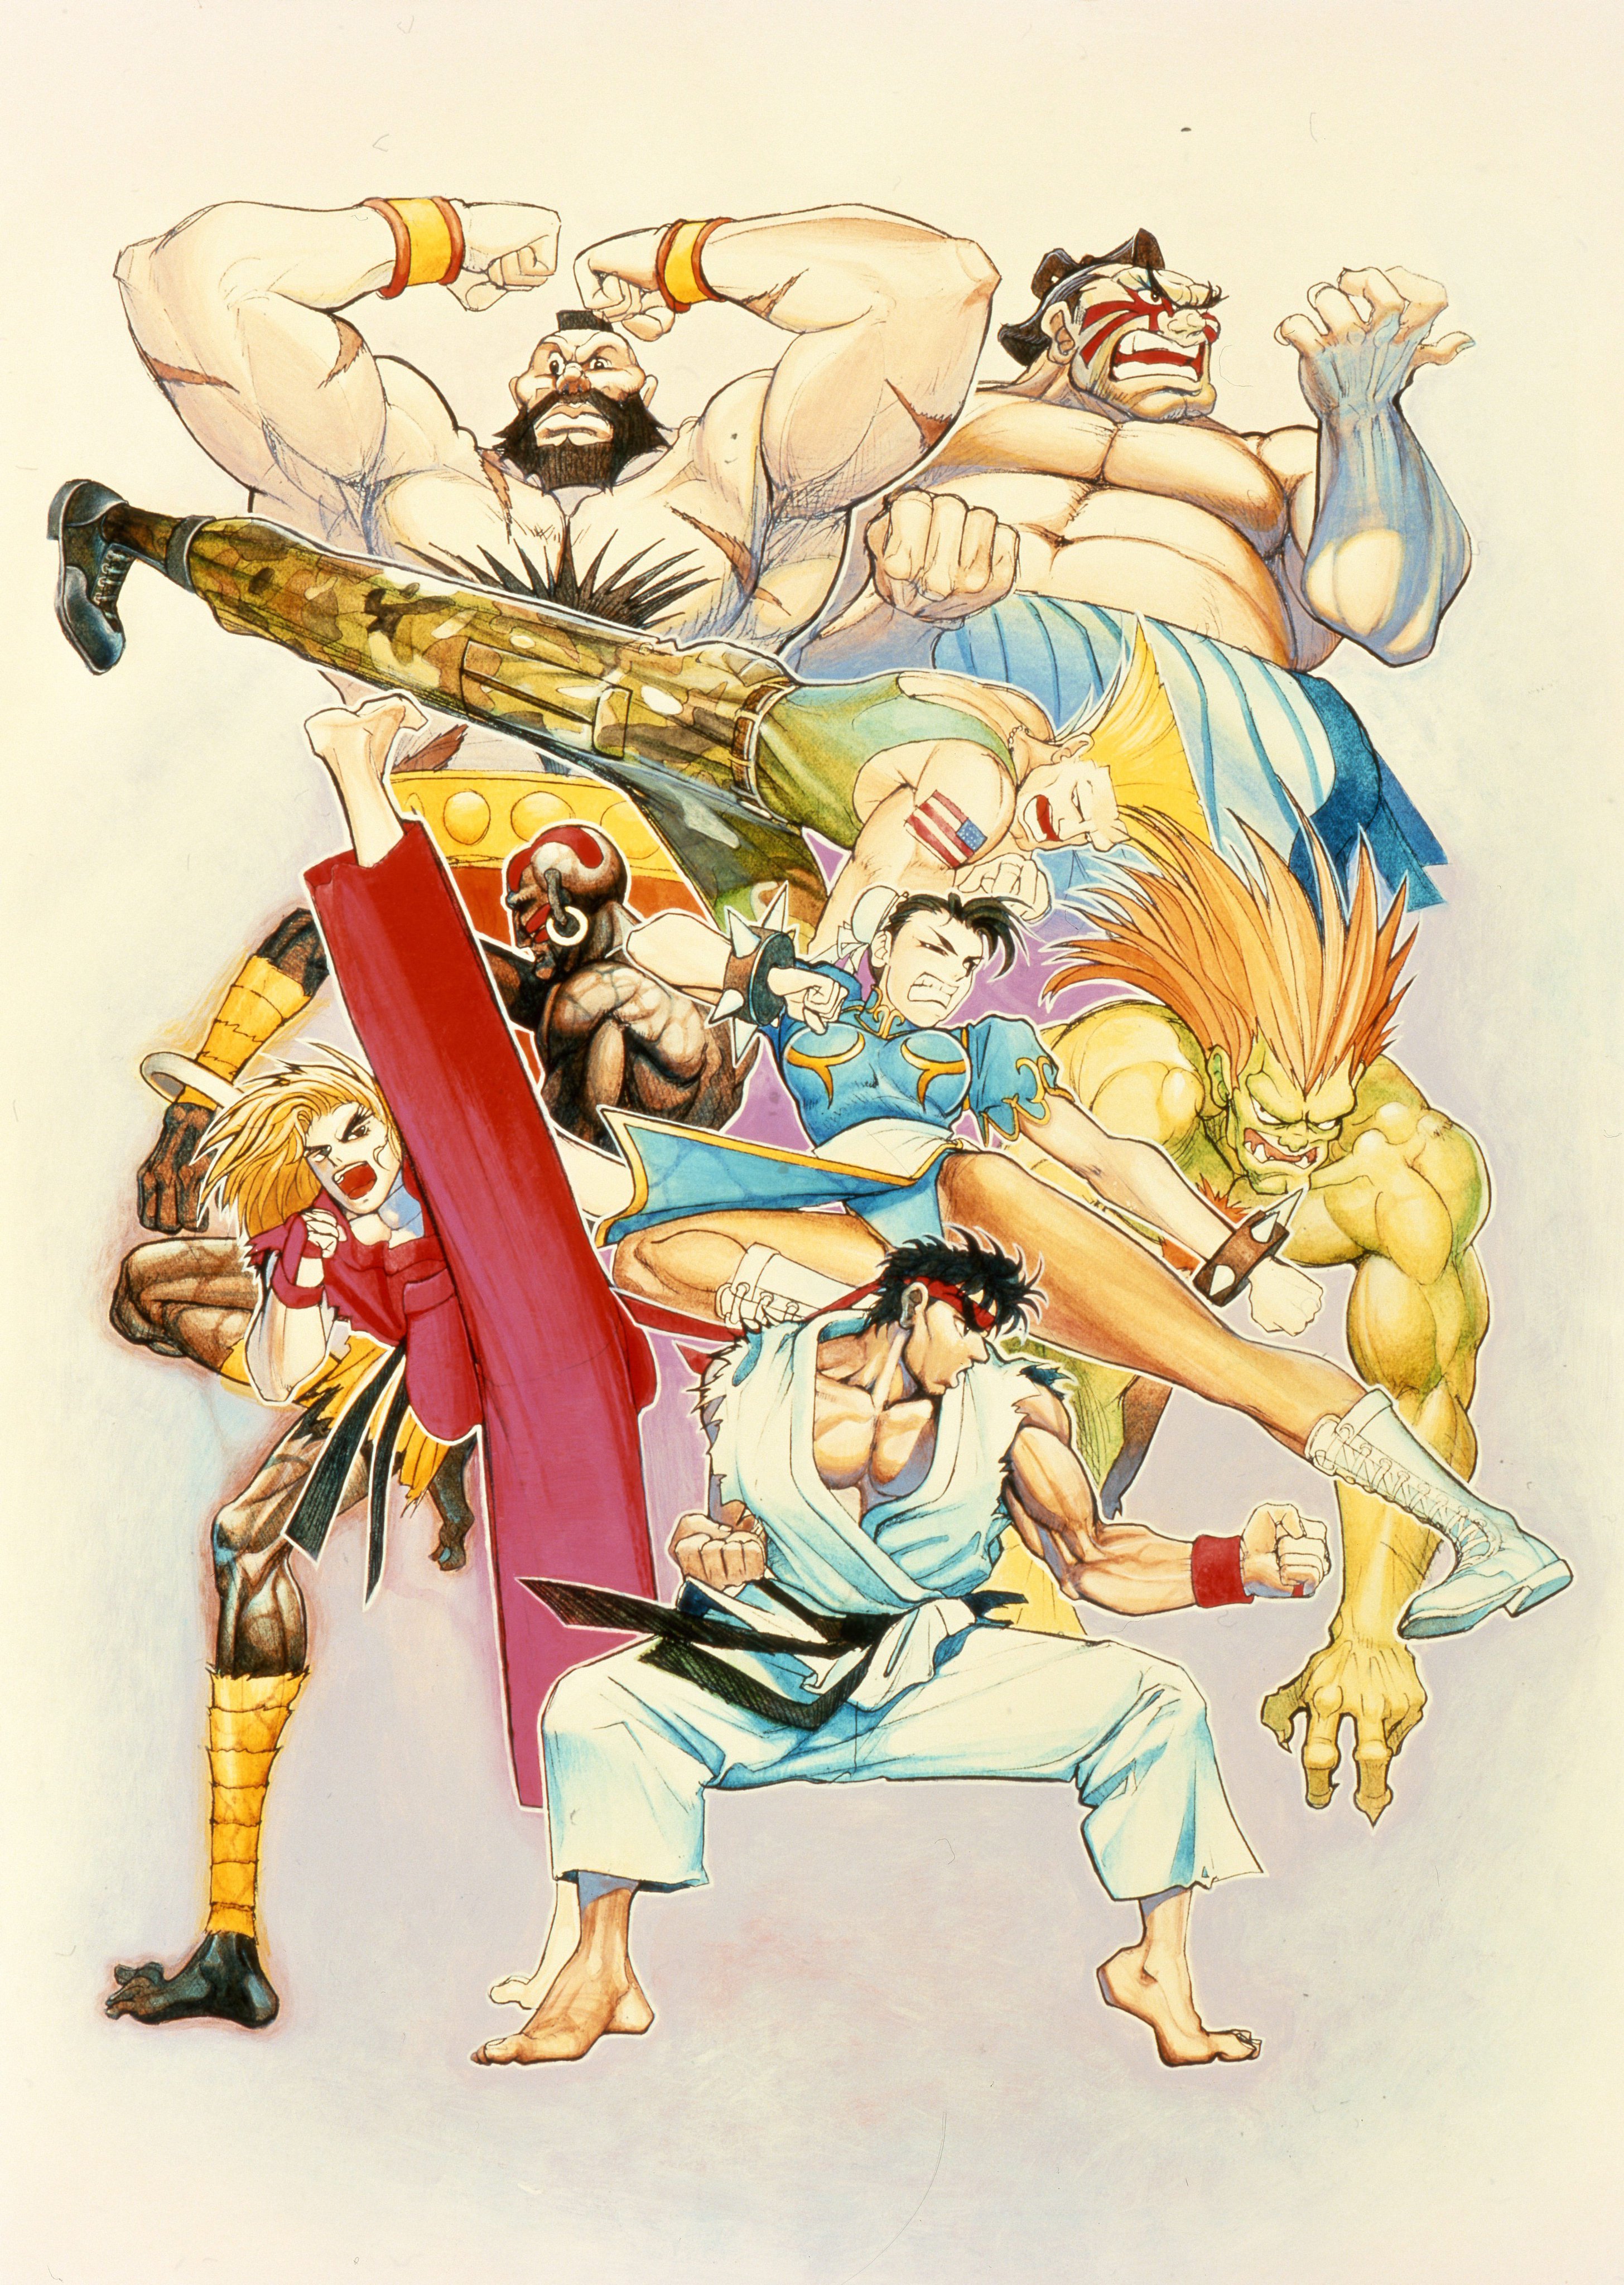 Video Game Art Archive on X: Blanka 'Street Fighter II' Super Nintendo   / X